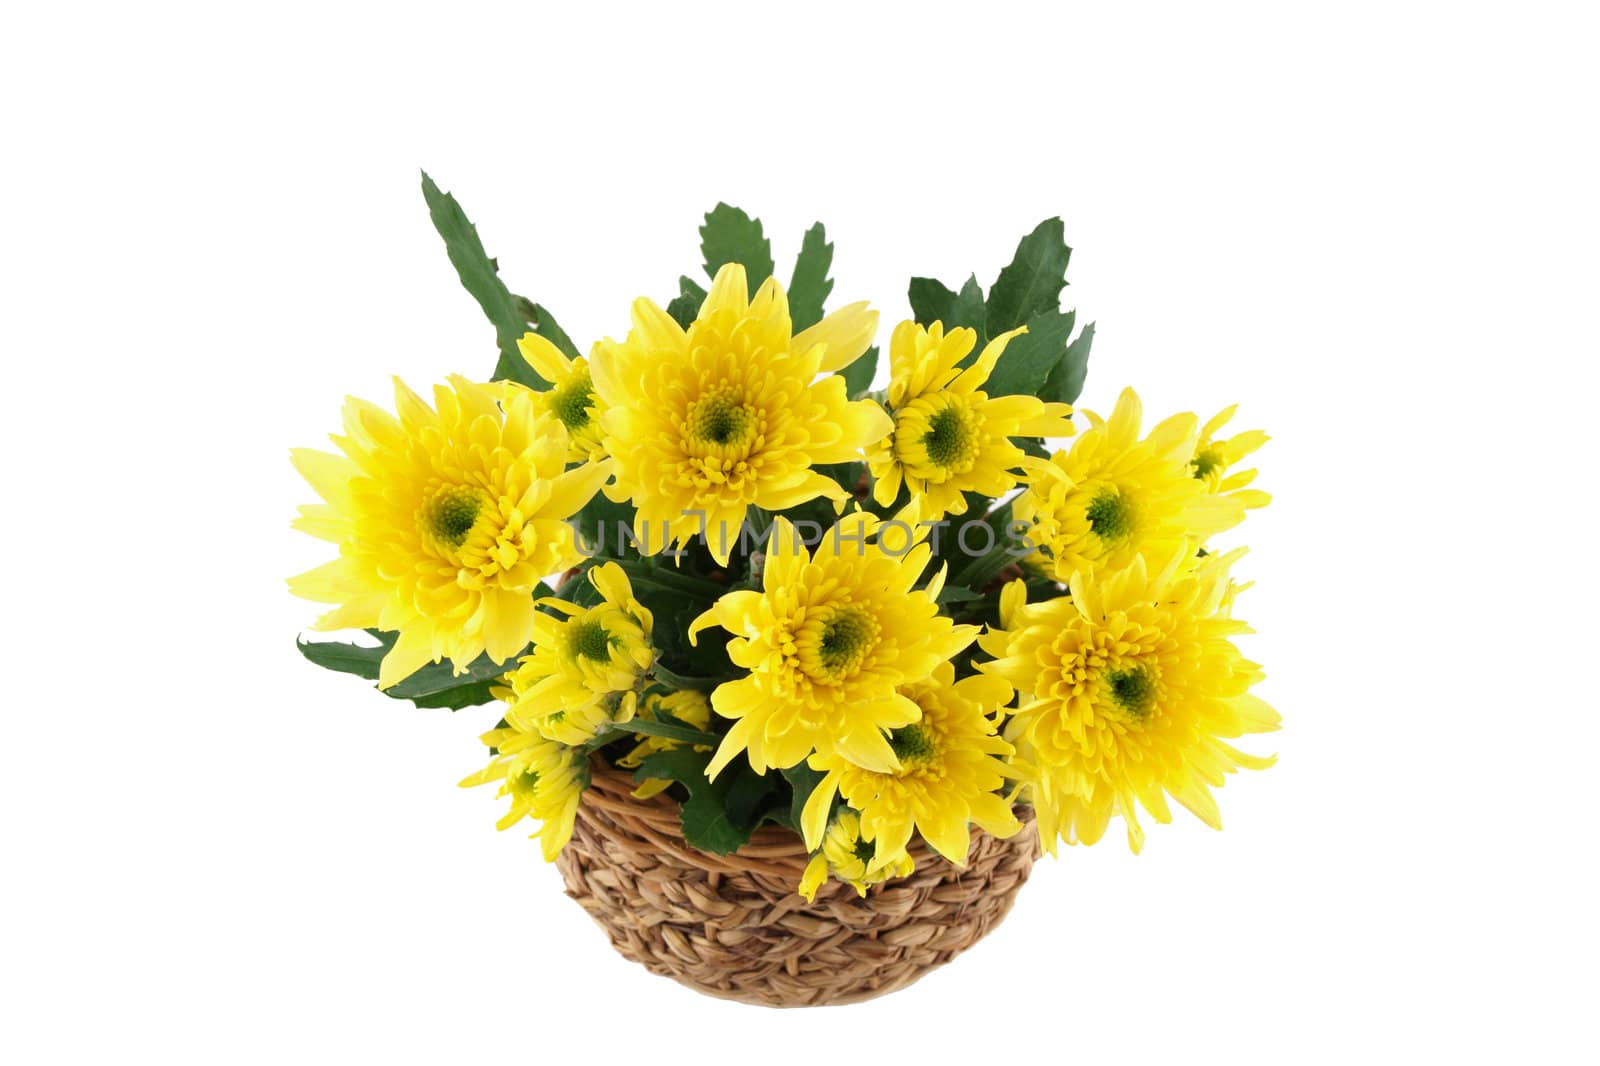 Yellow flower in the basket by jakgree